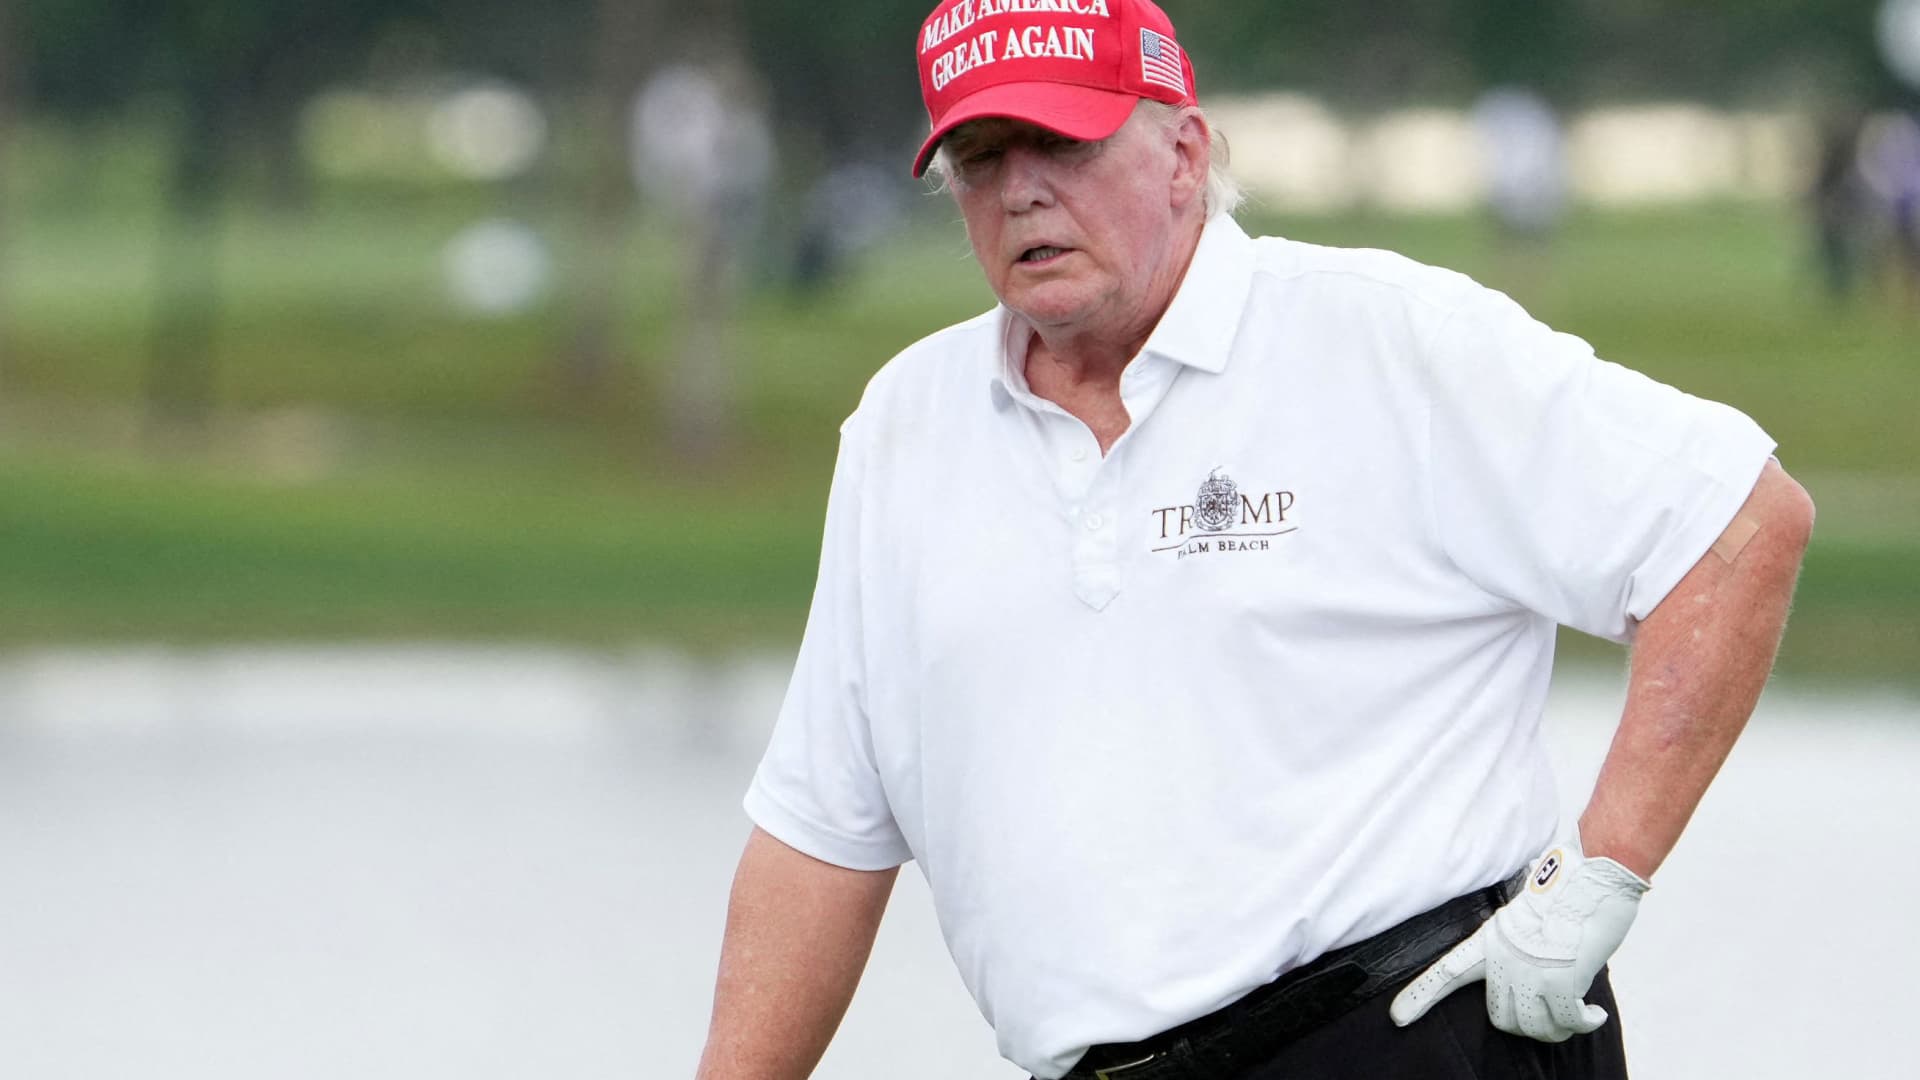 Trump criticizes PGA Tour, says Saudis have done fantastic job with LIV